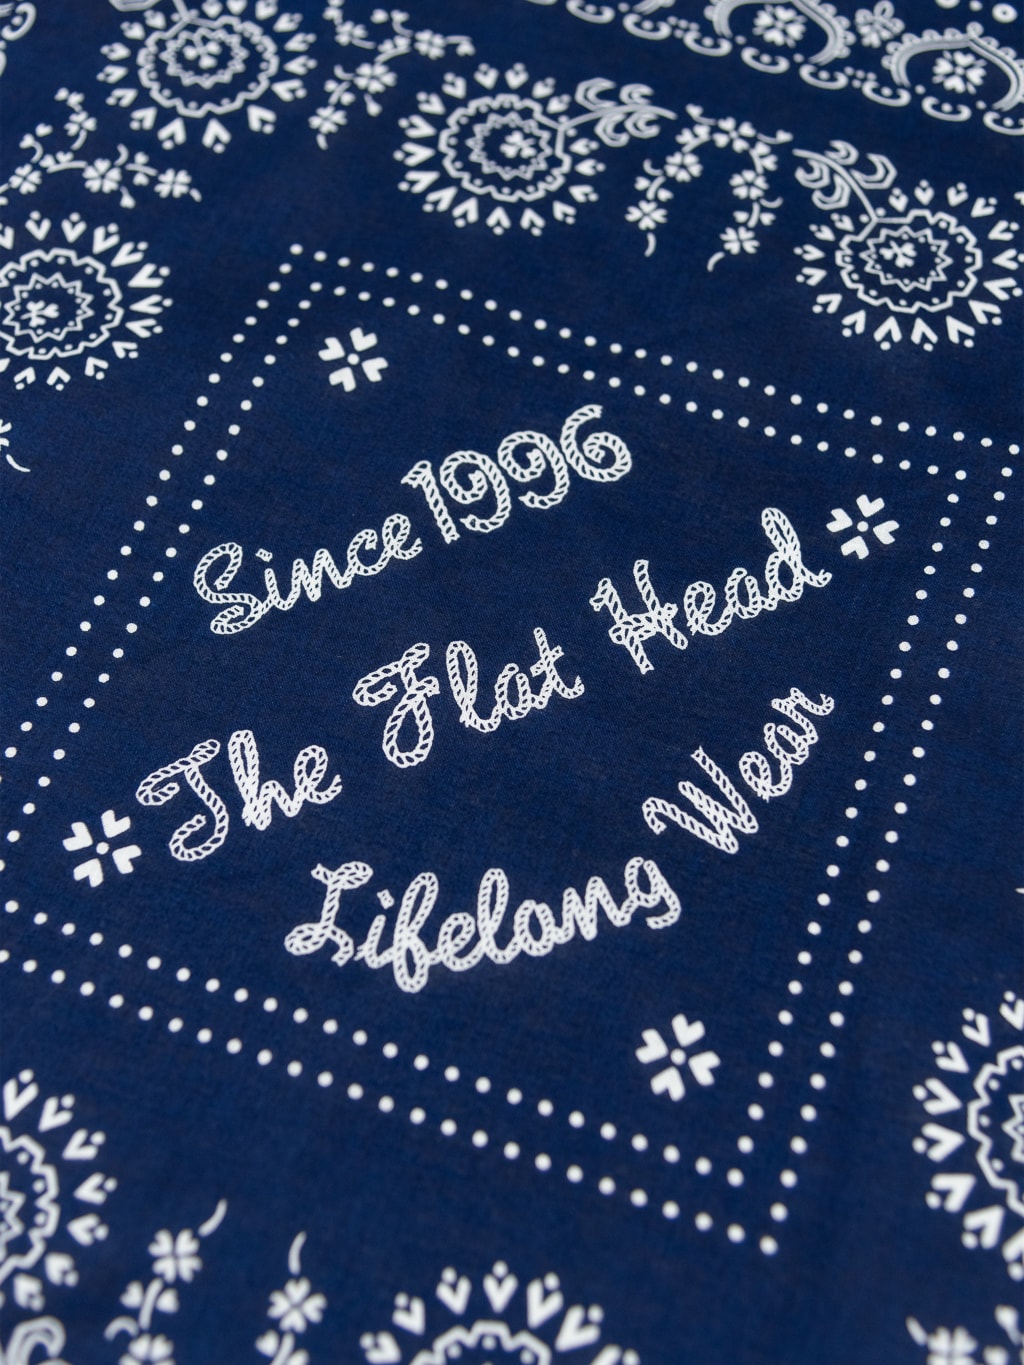 The Flat Head bandana cotton navy lettering